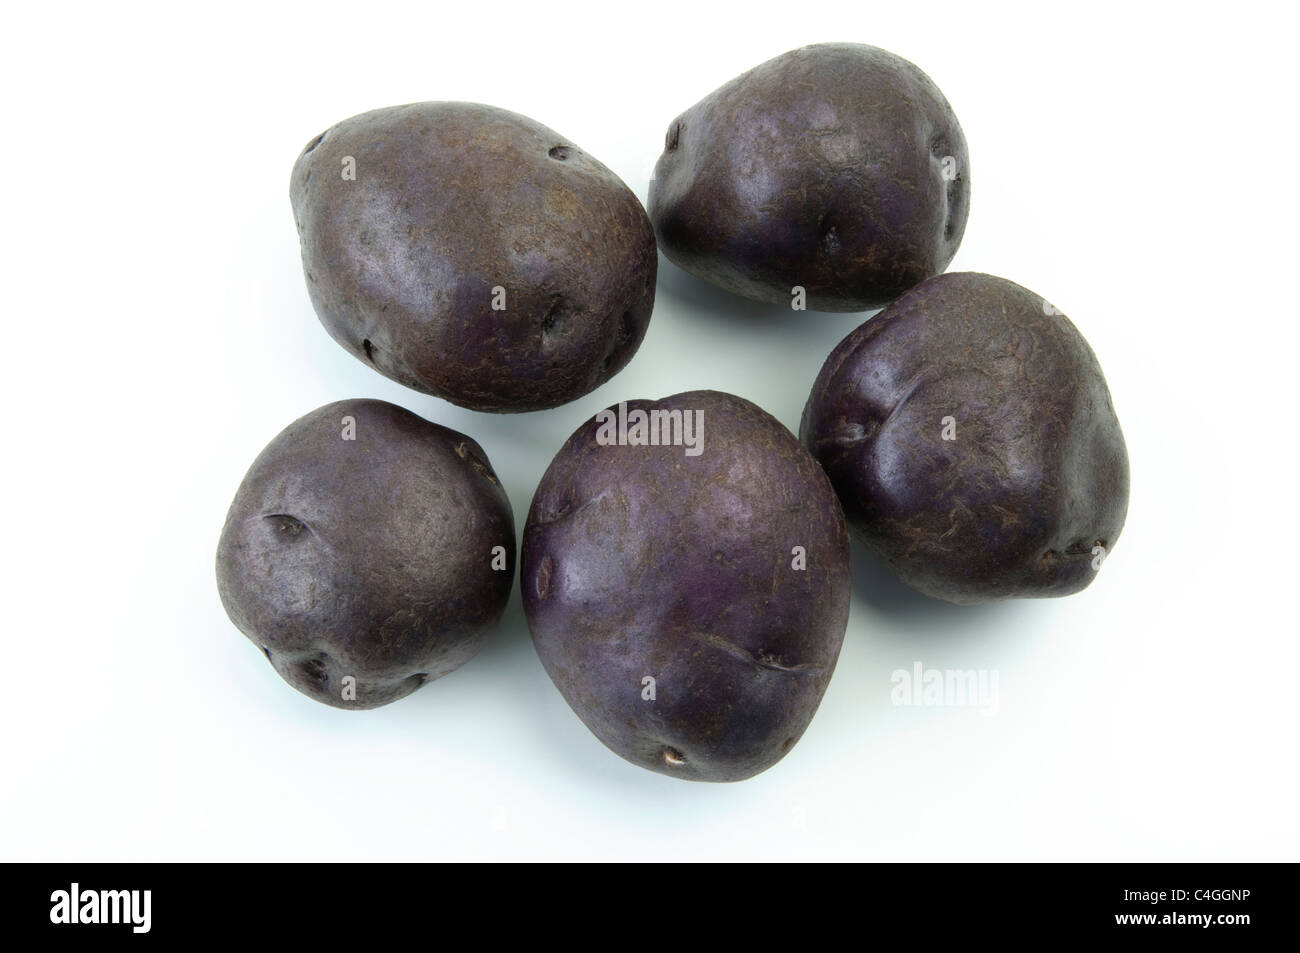 Potato (Solanum tuberosum Blue Salad Potato). Tubers, studio picture against a white background. Stock Photo